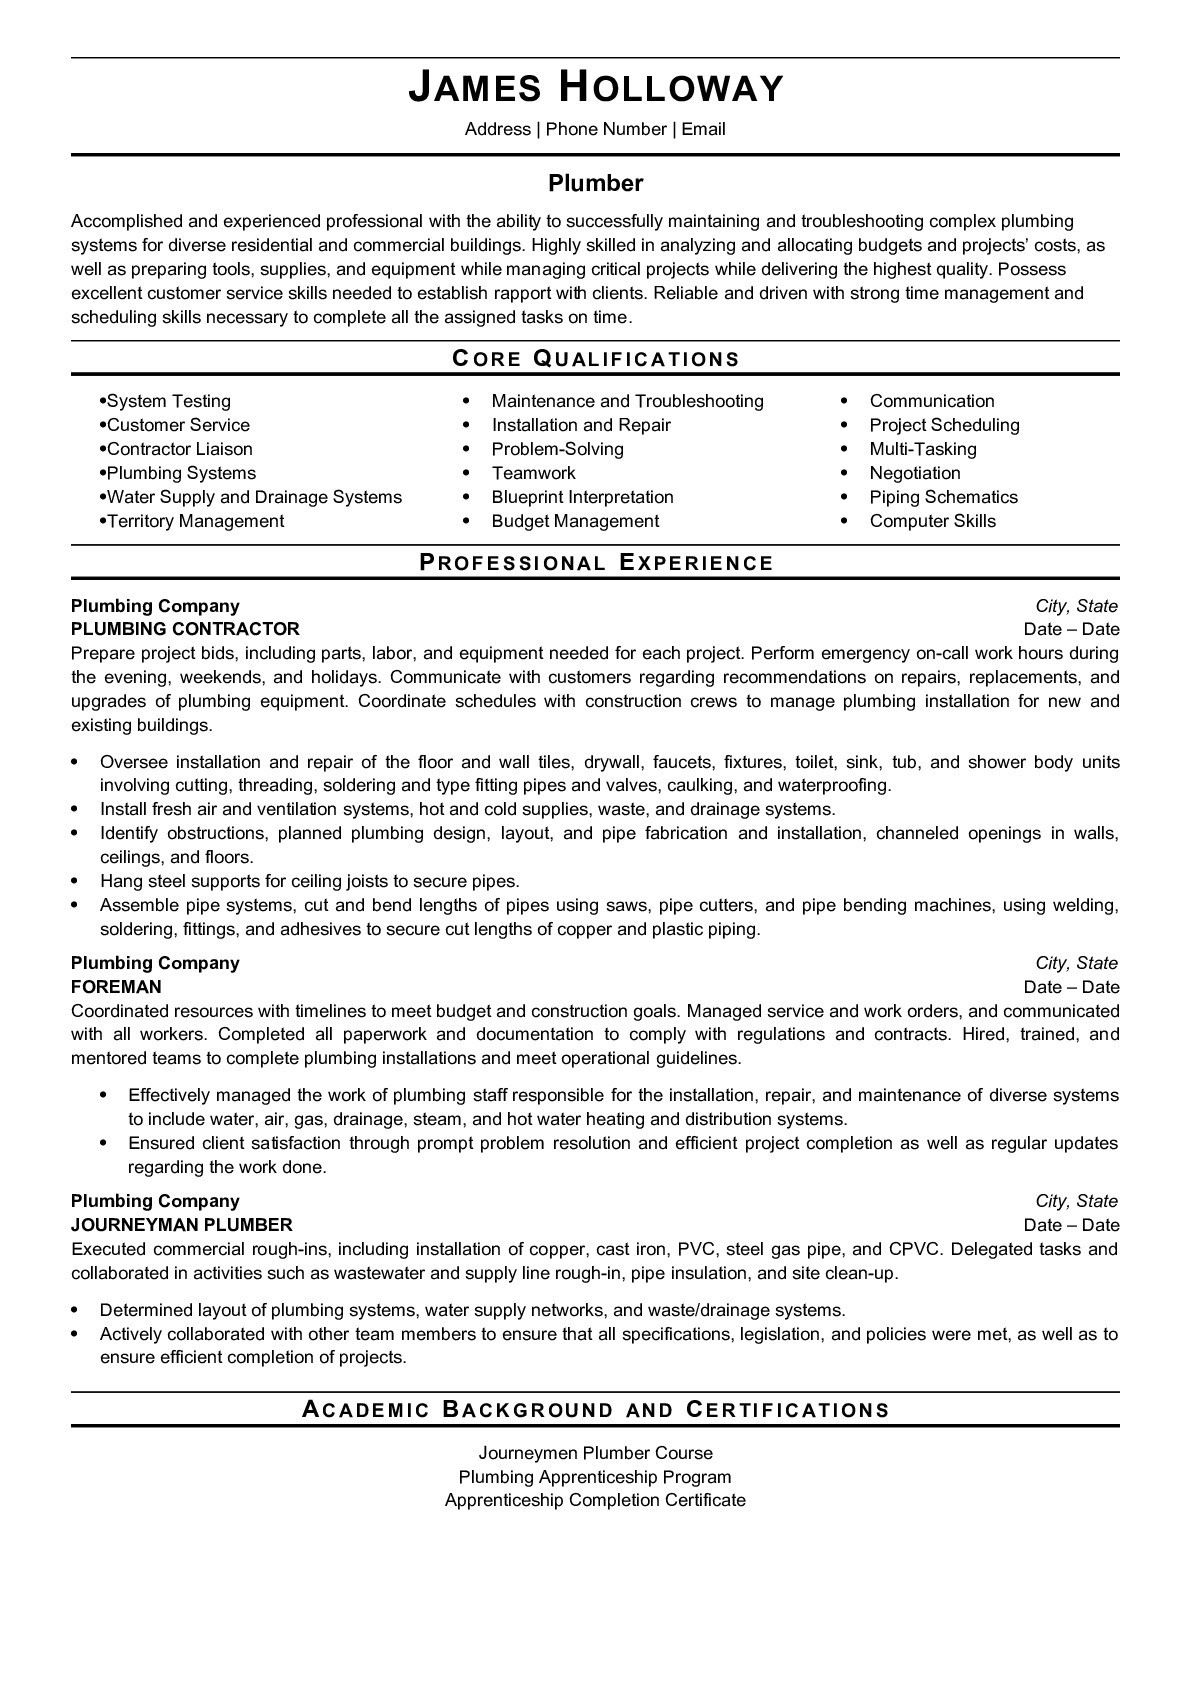 Sample Resume for Construction Insulation Worker Plumber Resume Sample Skills & Job Description Requirements